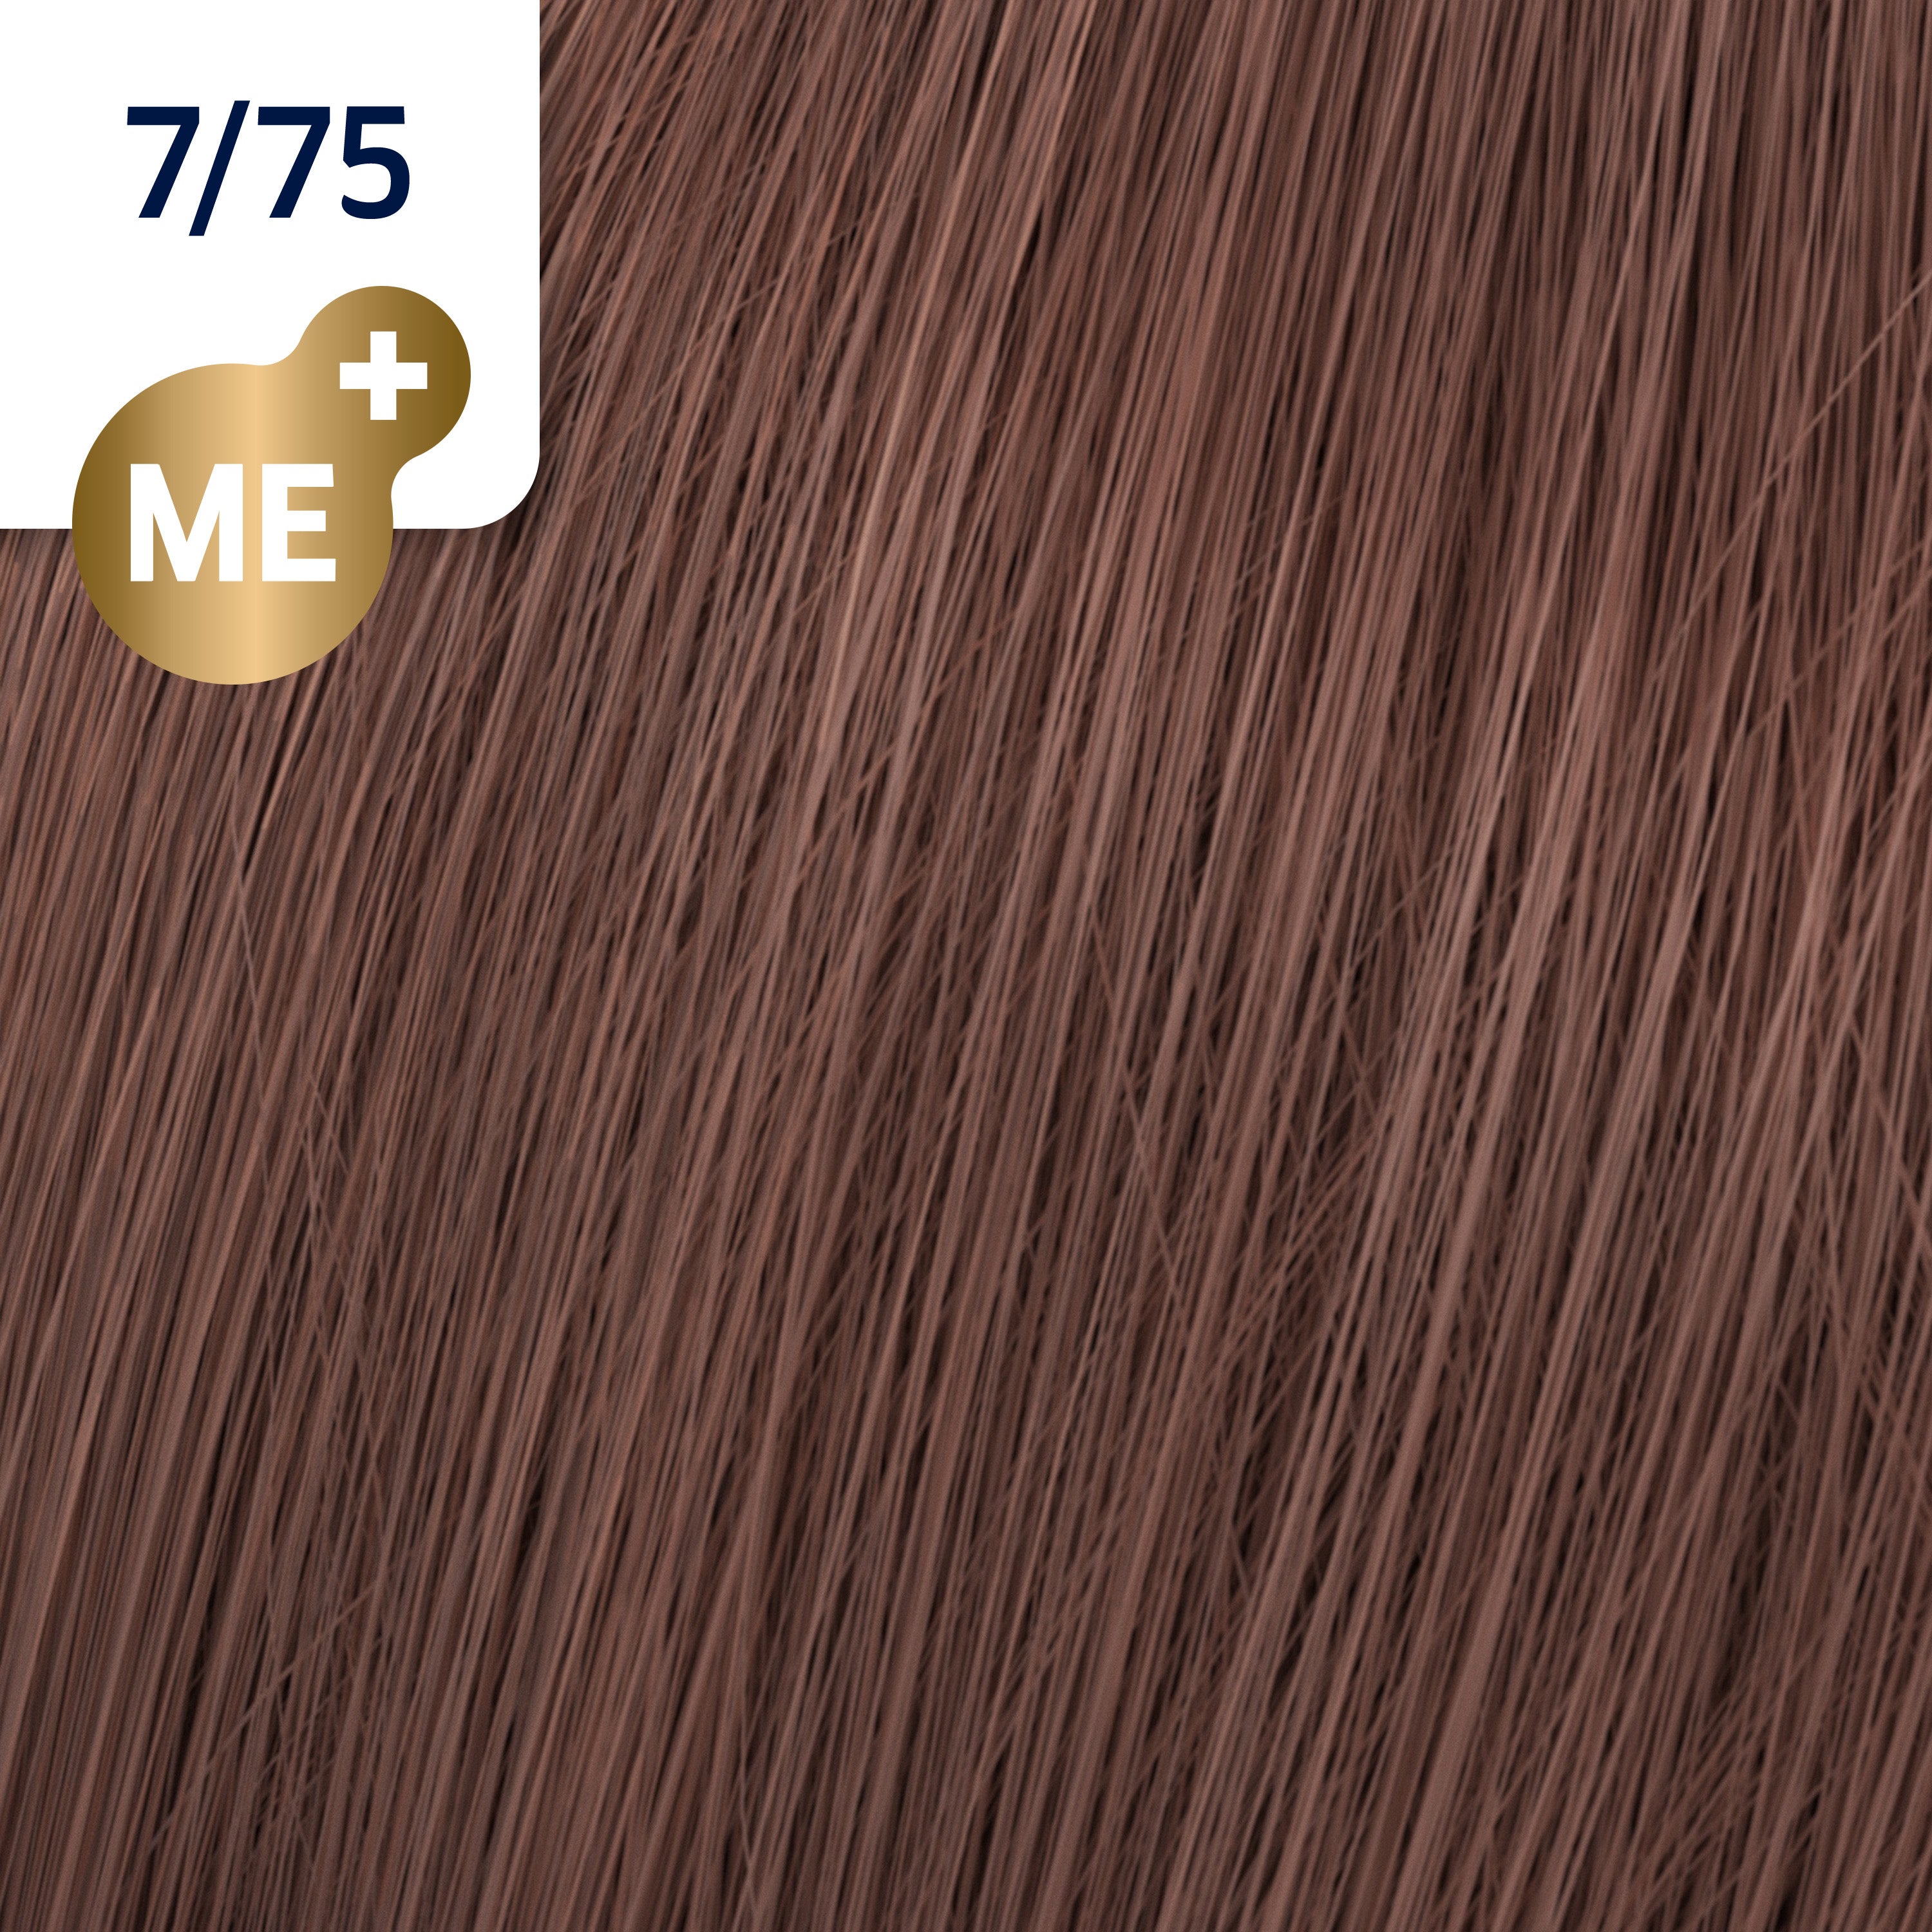 Wella Koleston Perfect Me+ Deep Browns 7/75 Medium Brunette - Mahogany Blonde